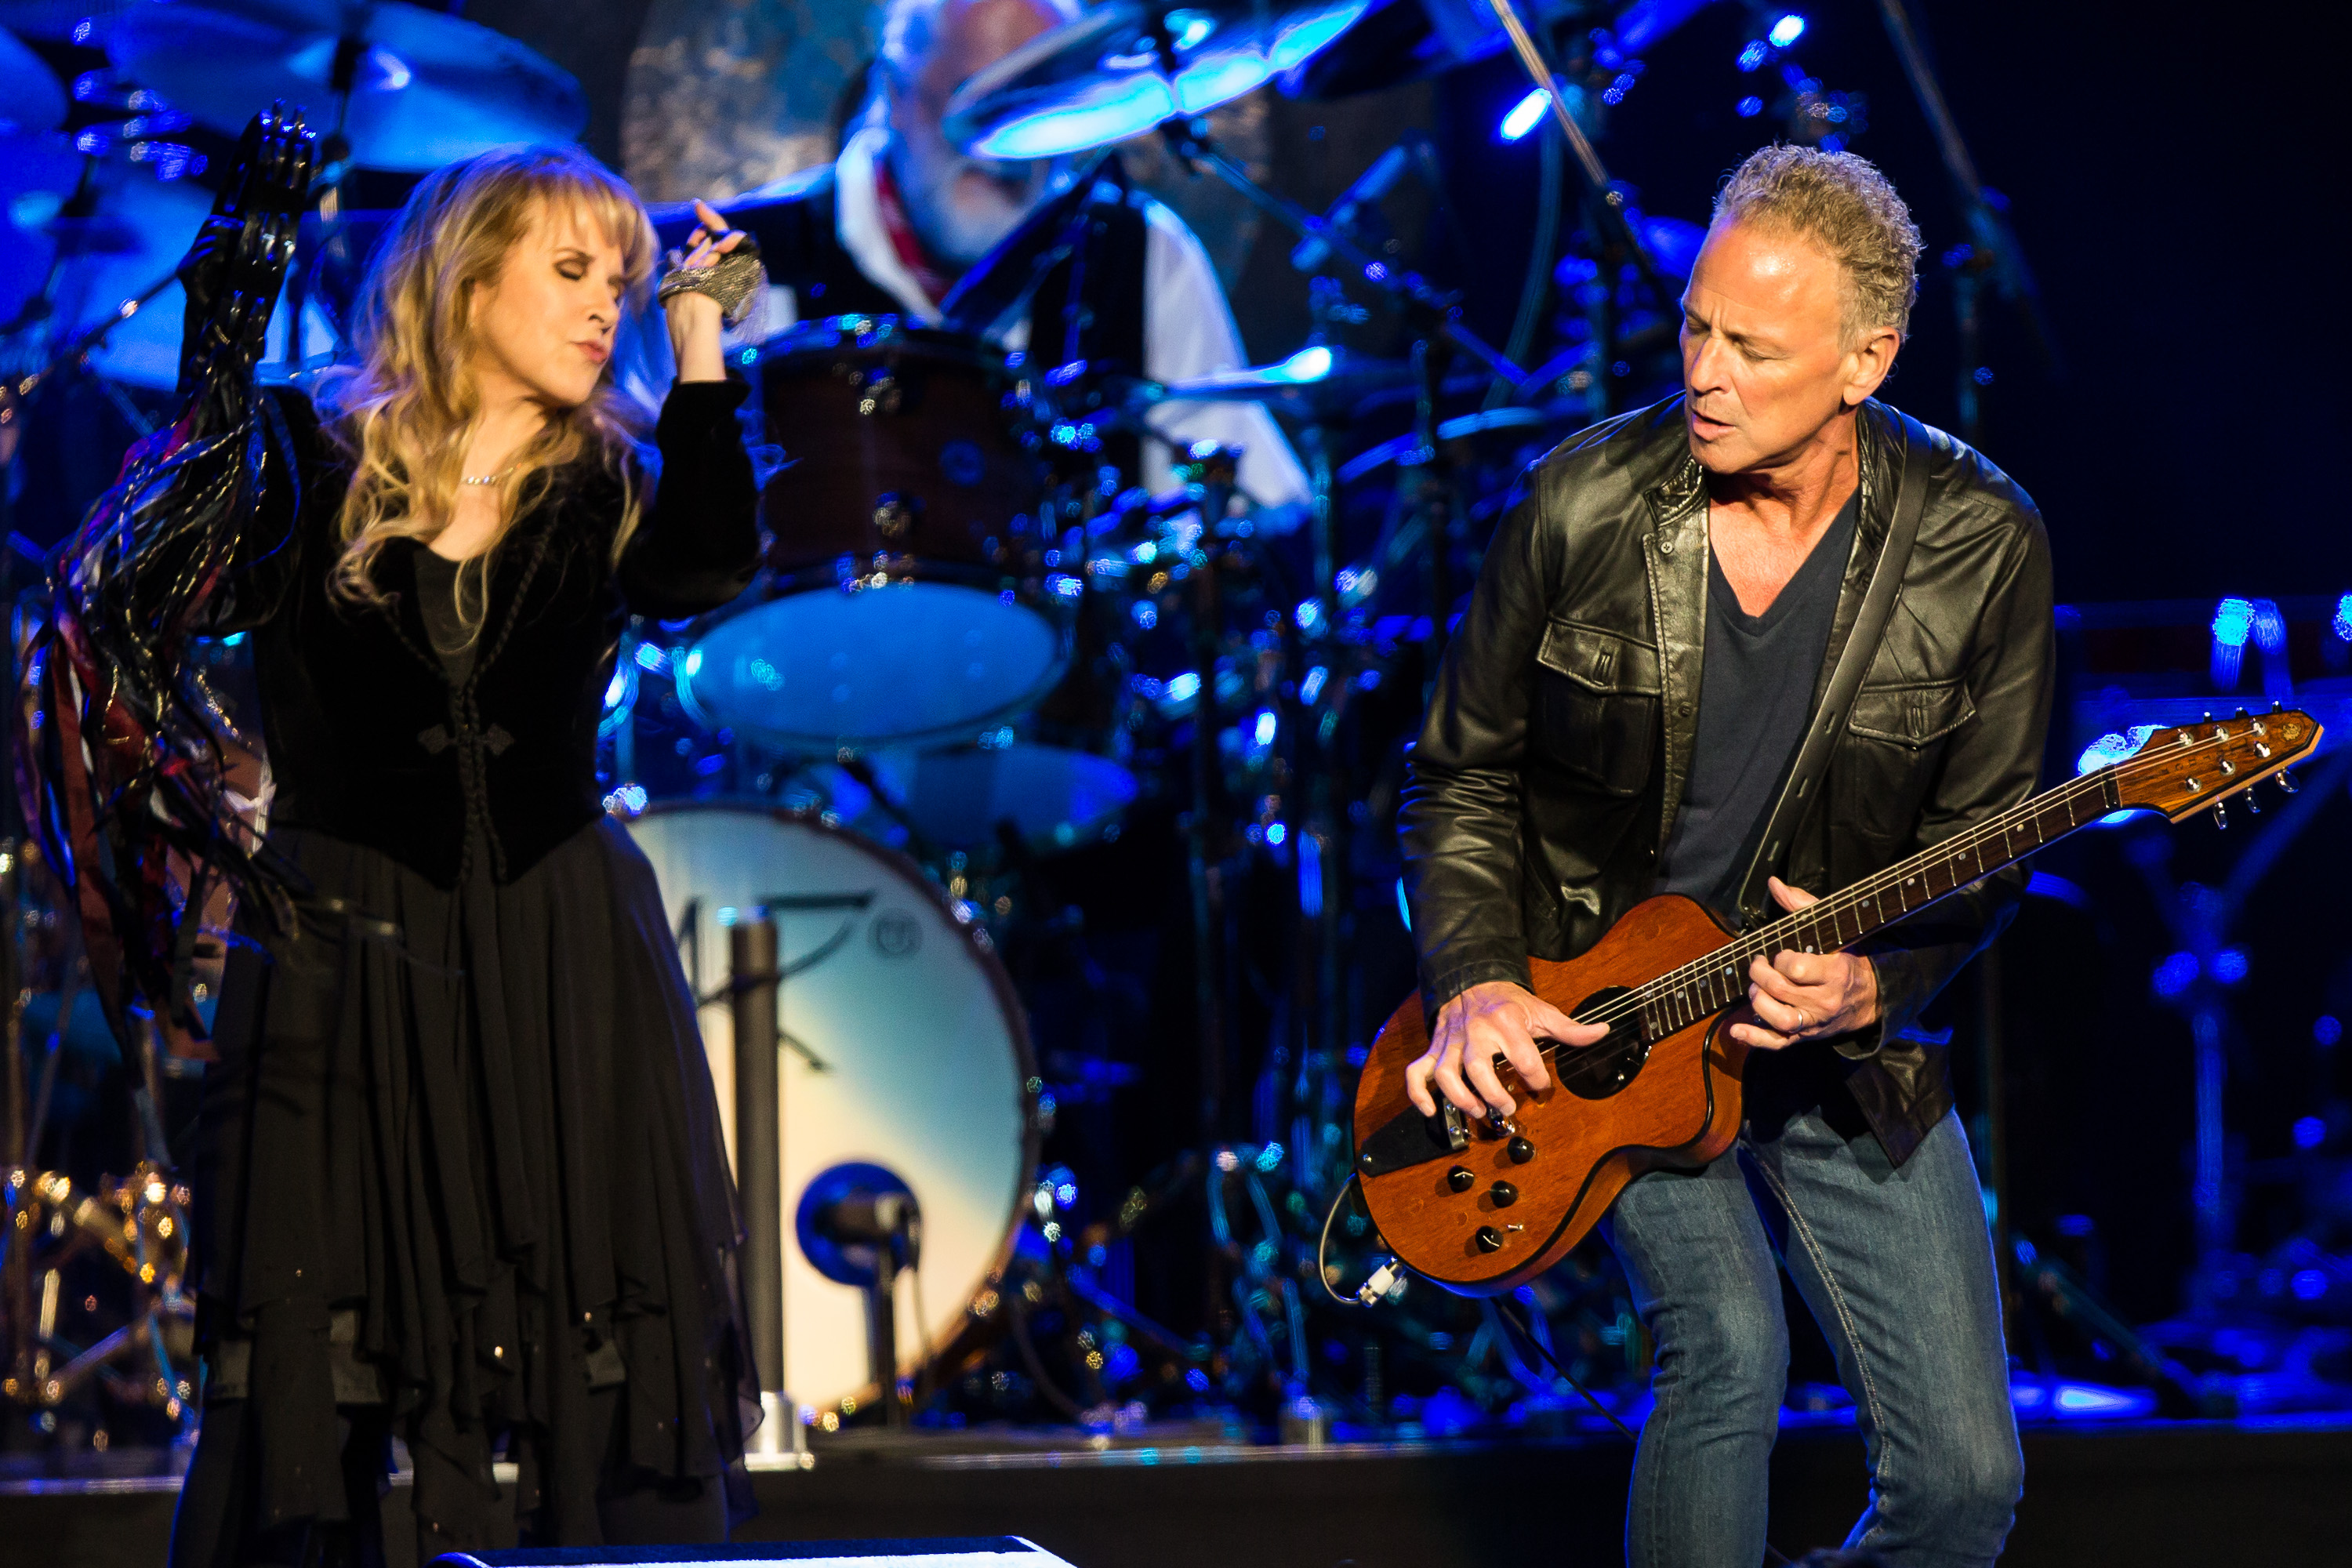 Vocalist Stevie Nicks and vocalist/guitarist Lindsay Buckingham at Fleetwood Mac's concert at Staples Center